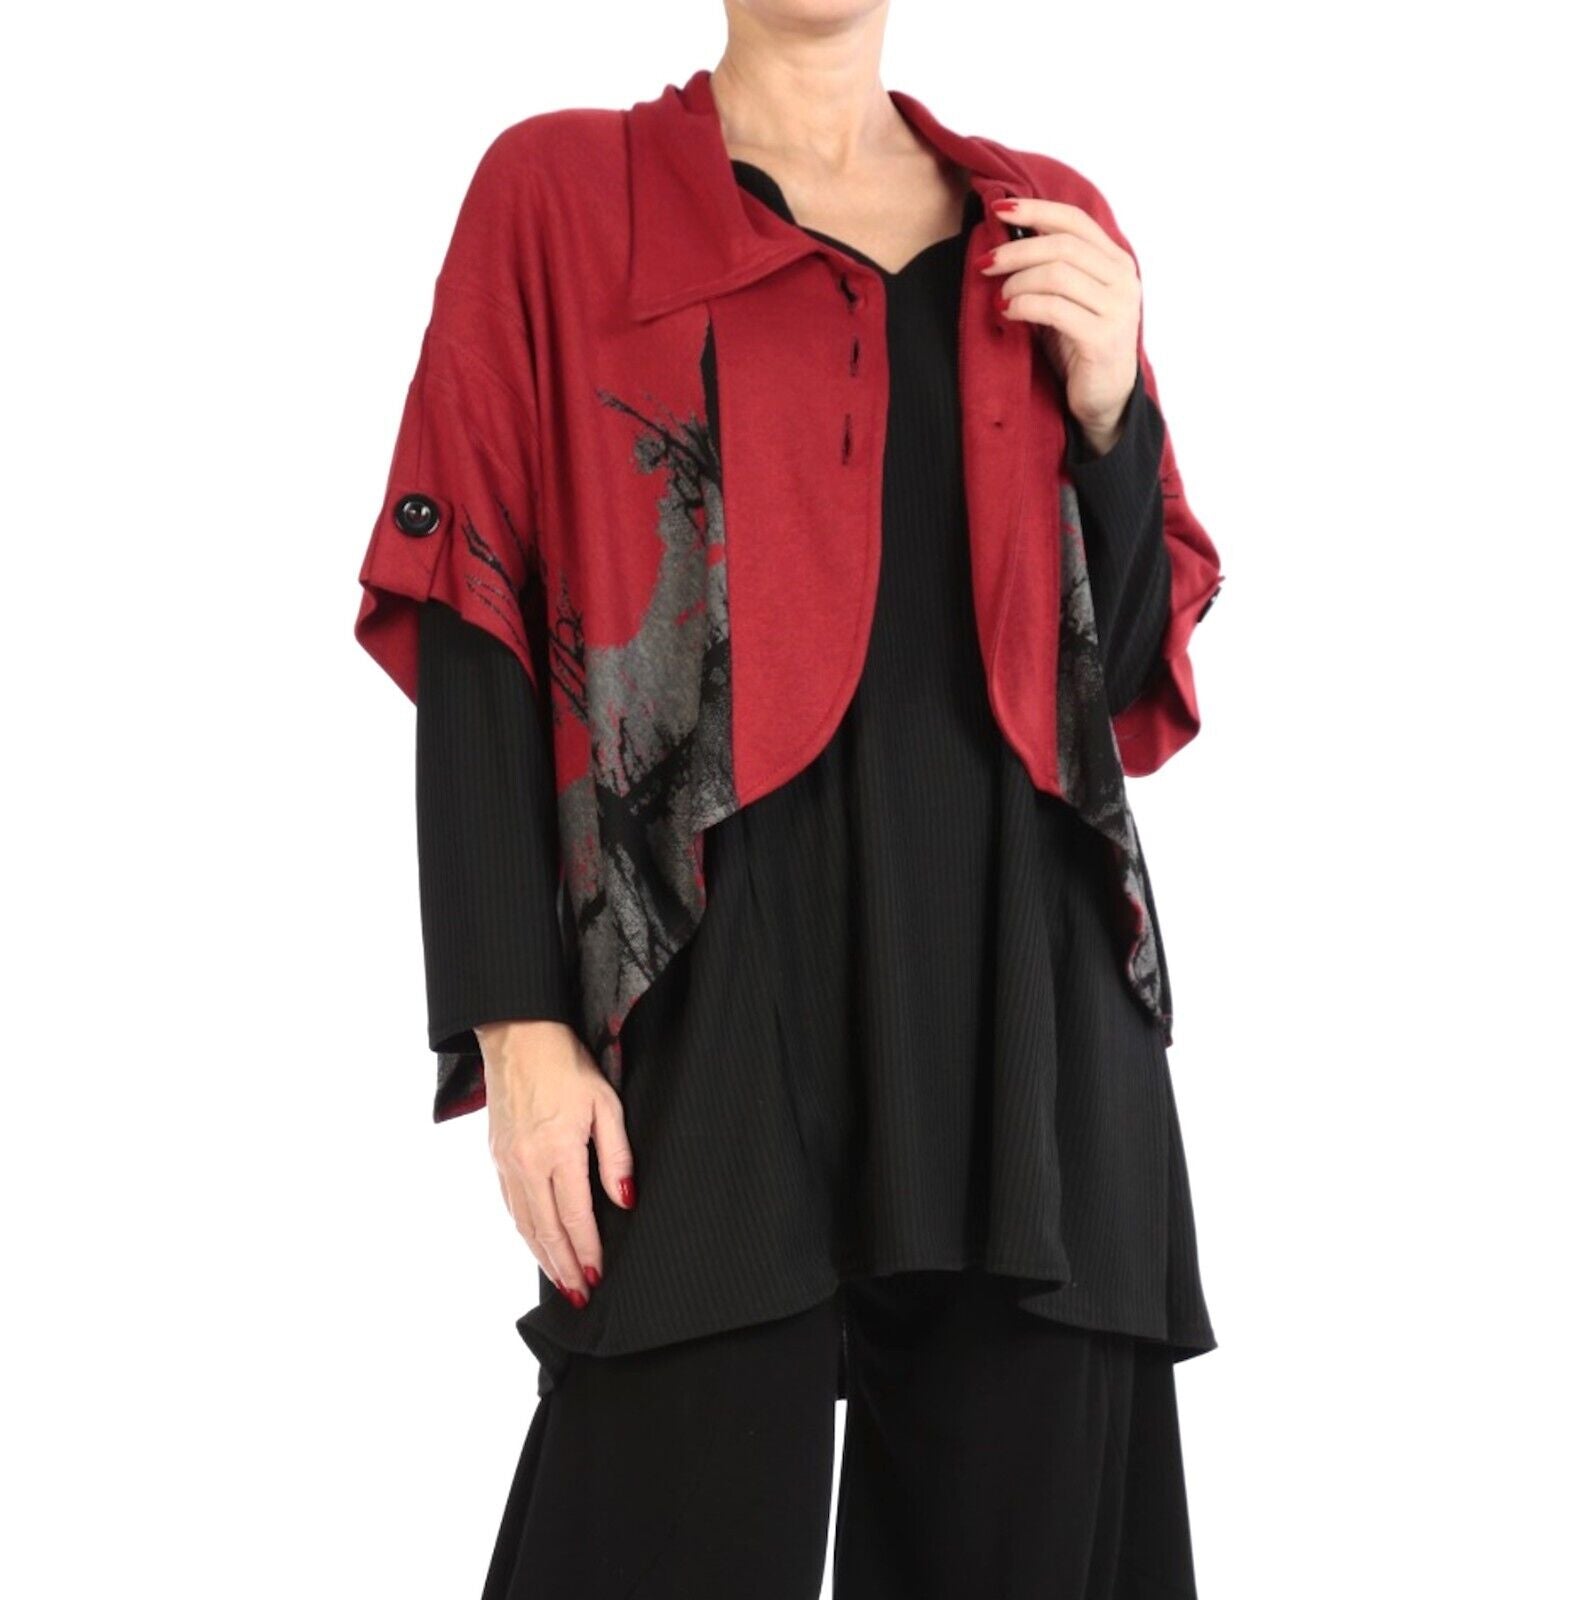 Cover UP-Femme - Damen Jacke - Stylisch warmes Material - 44 - 54 - Lagenlook